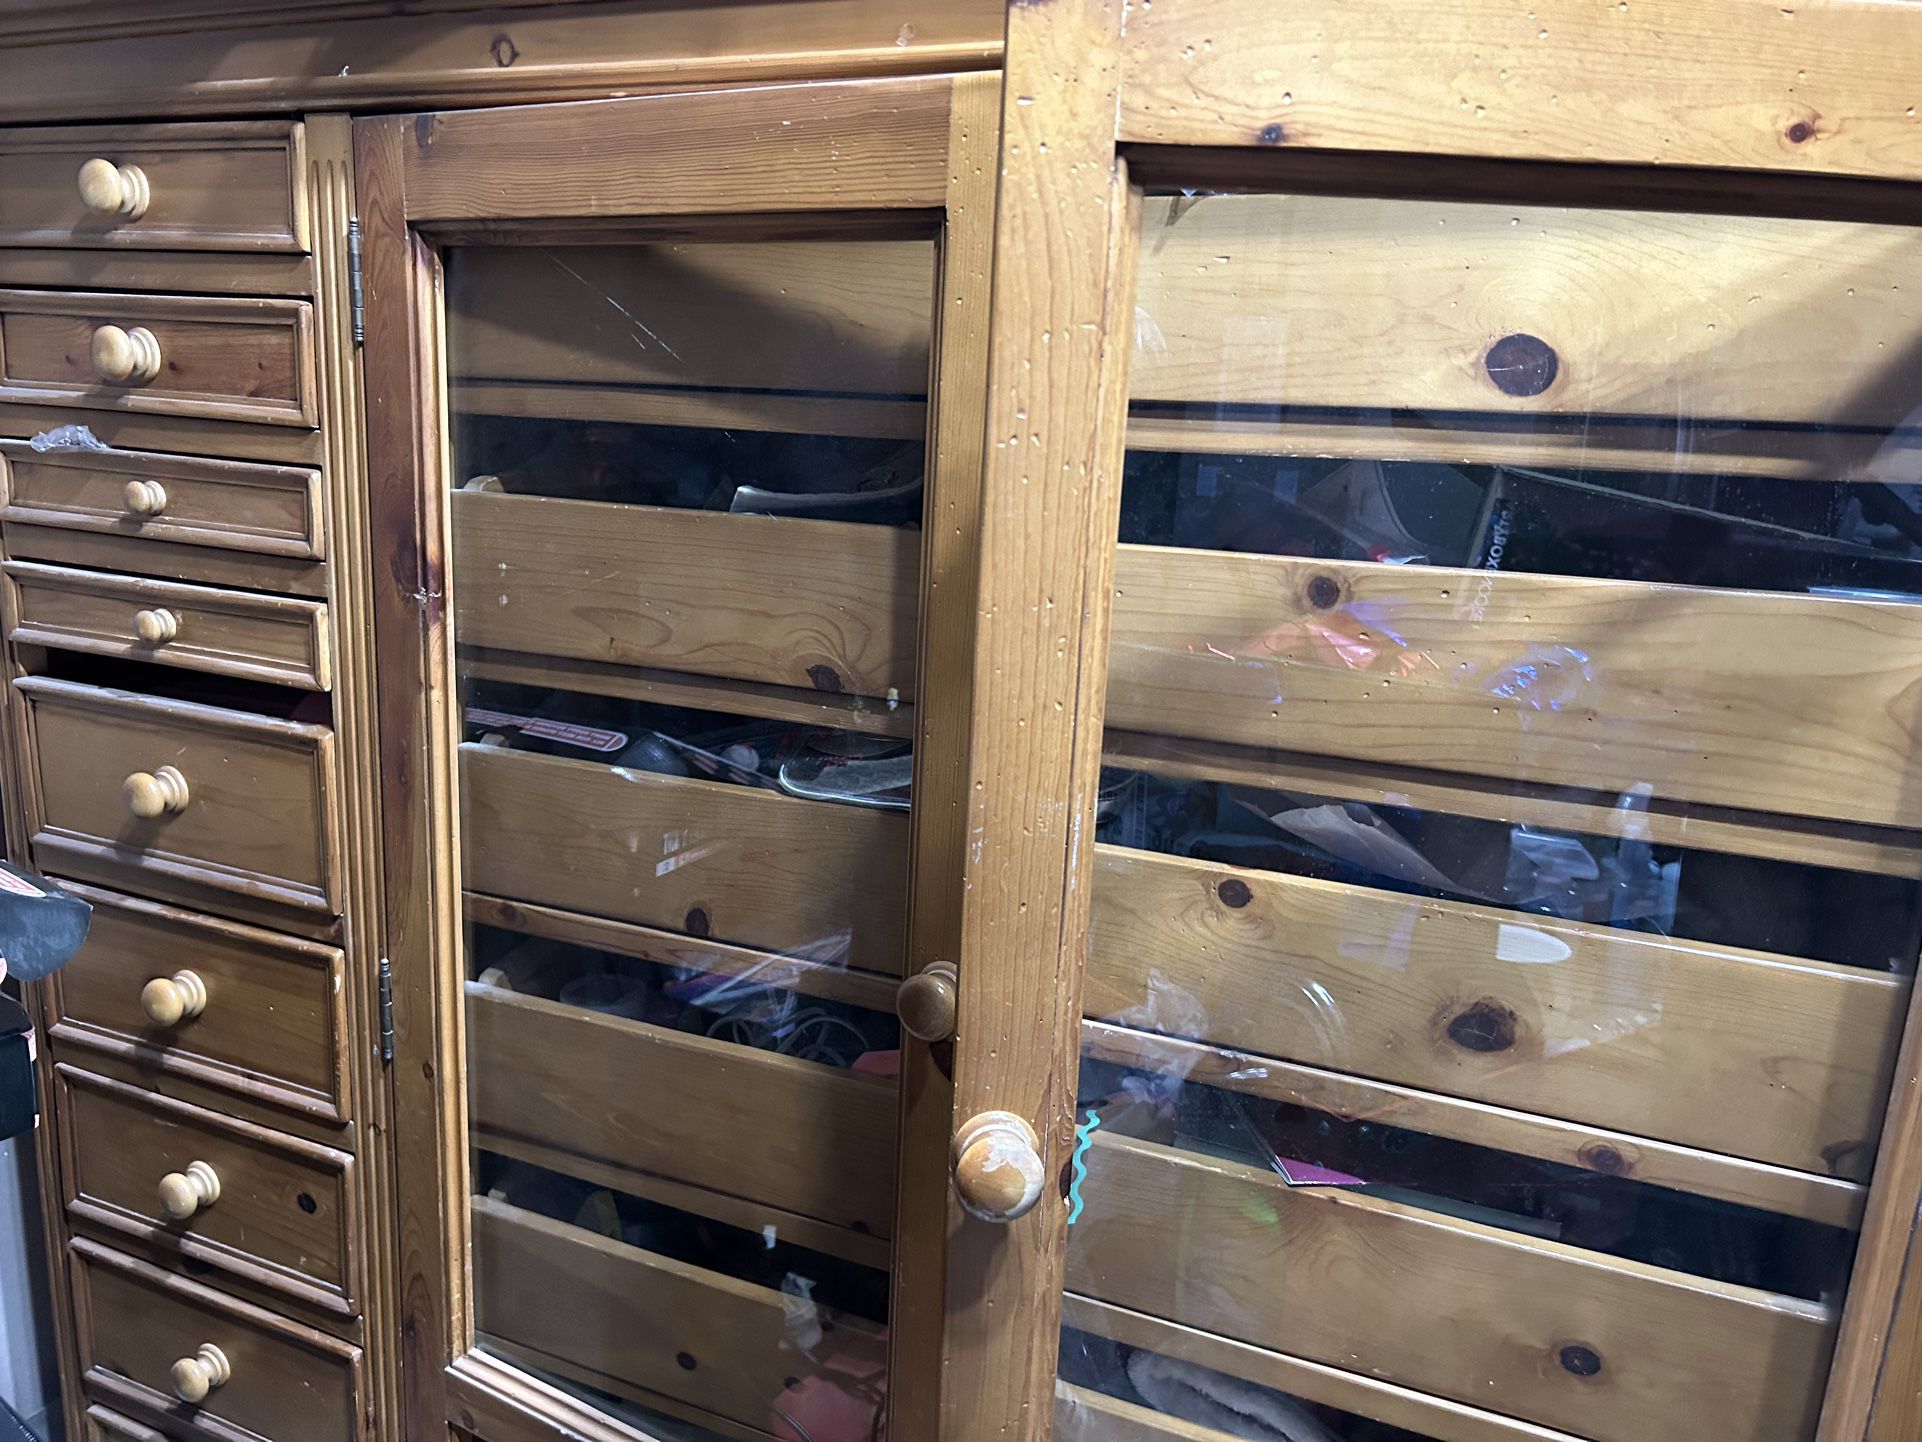  Organizer Wood Craft Or Sewing Shelf Enclose Case